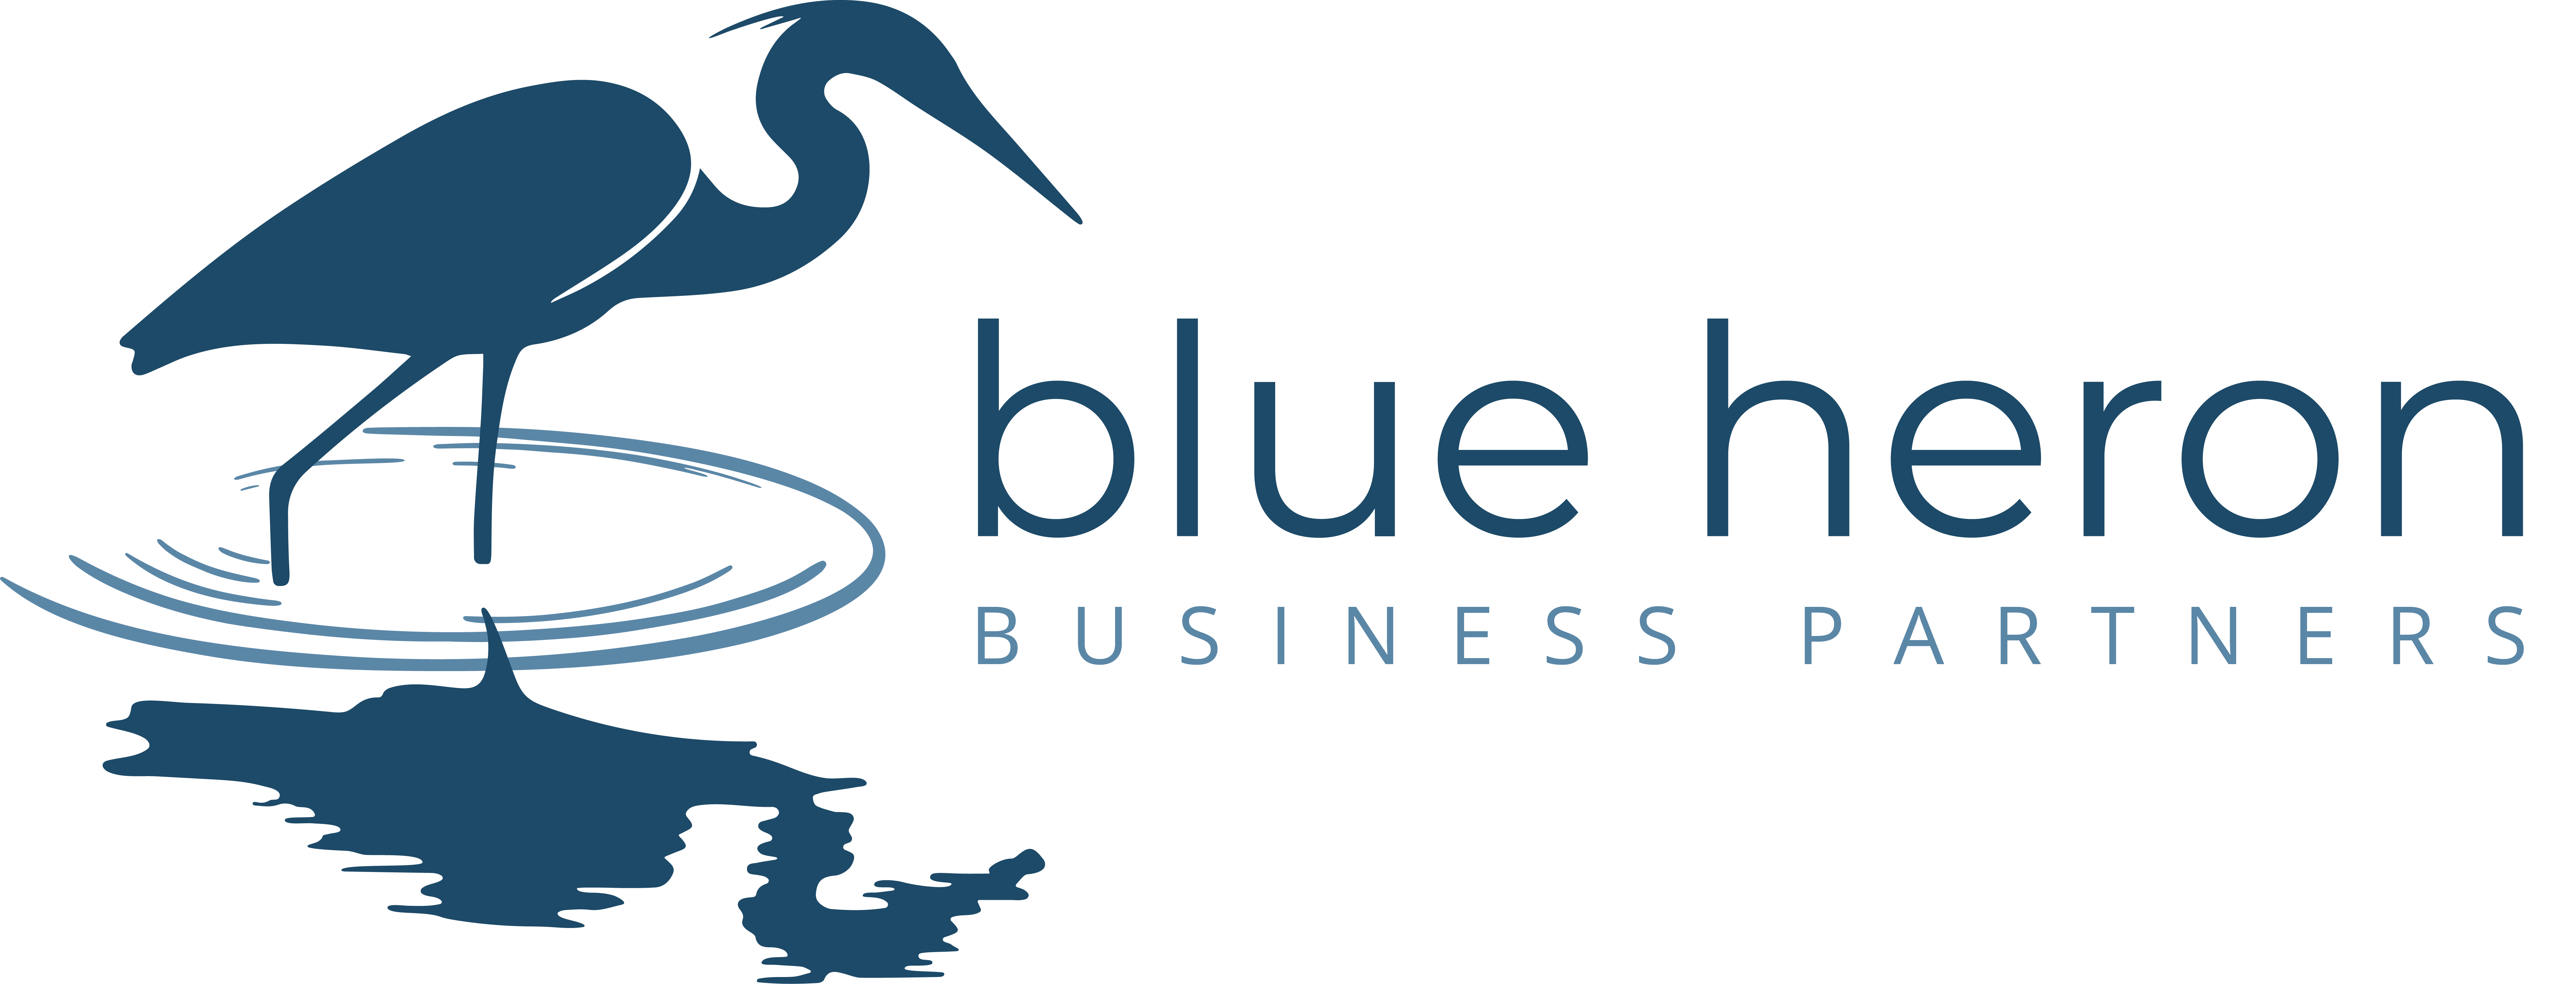 blue heron business partners